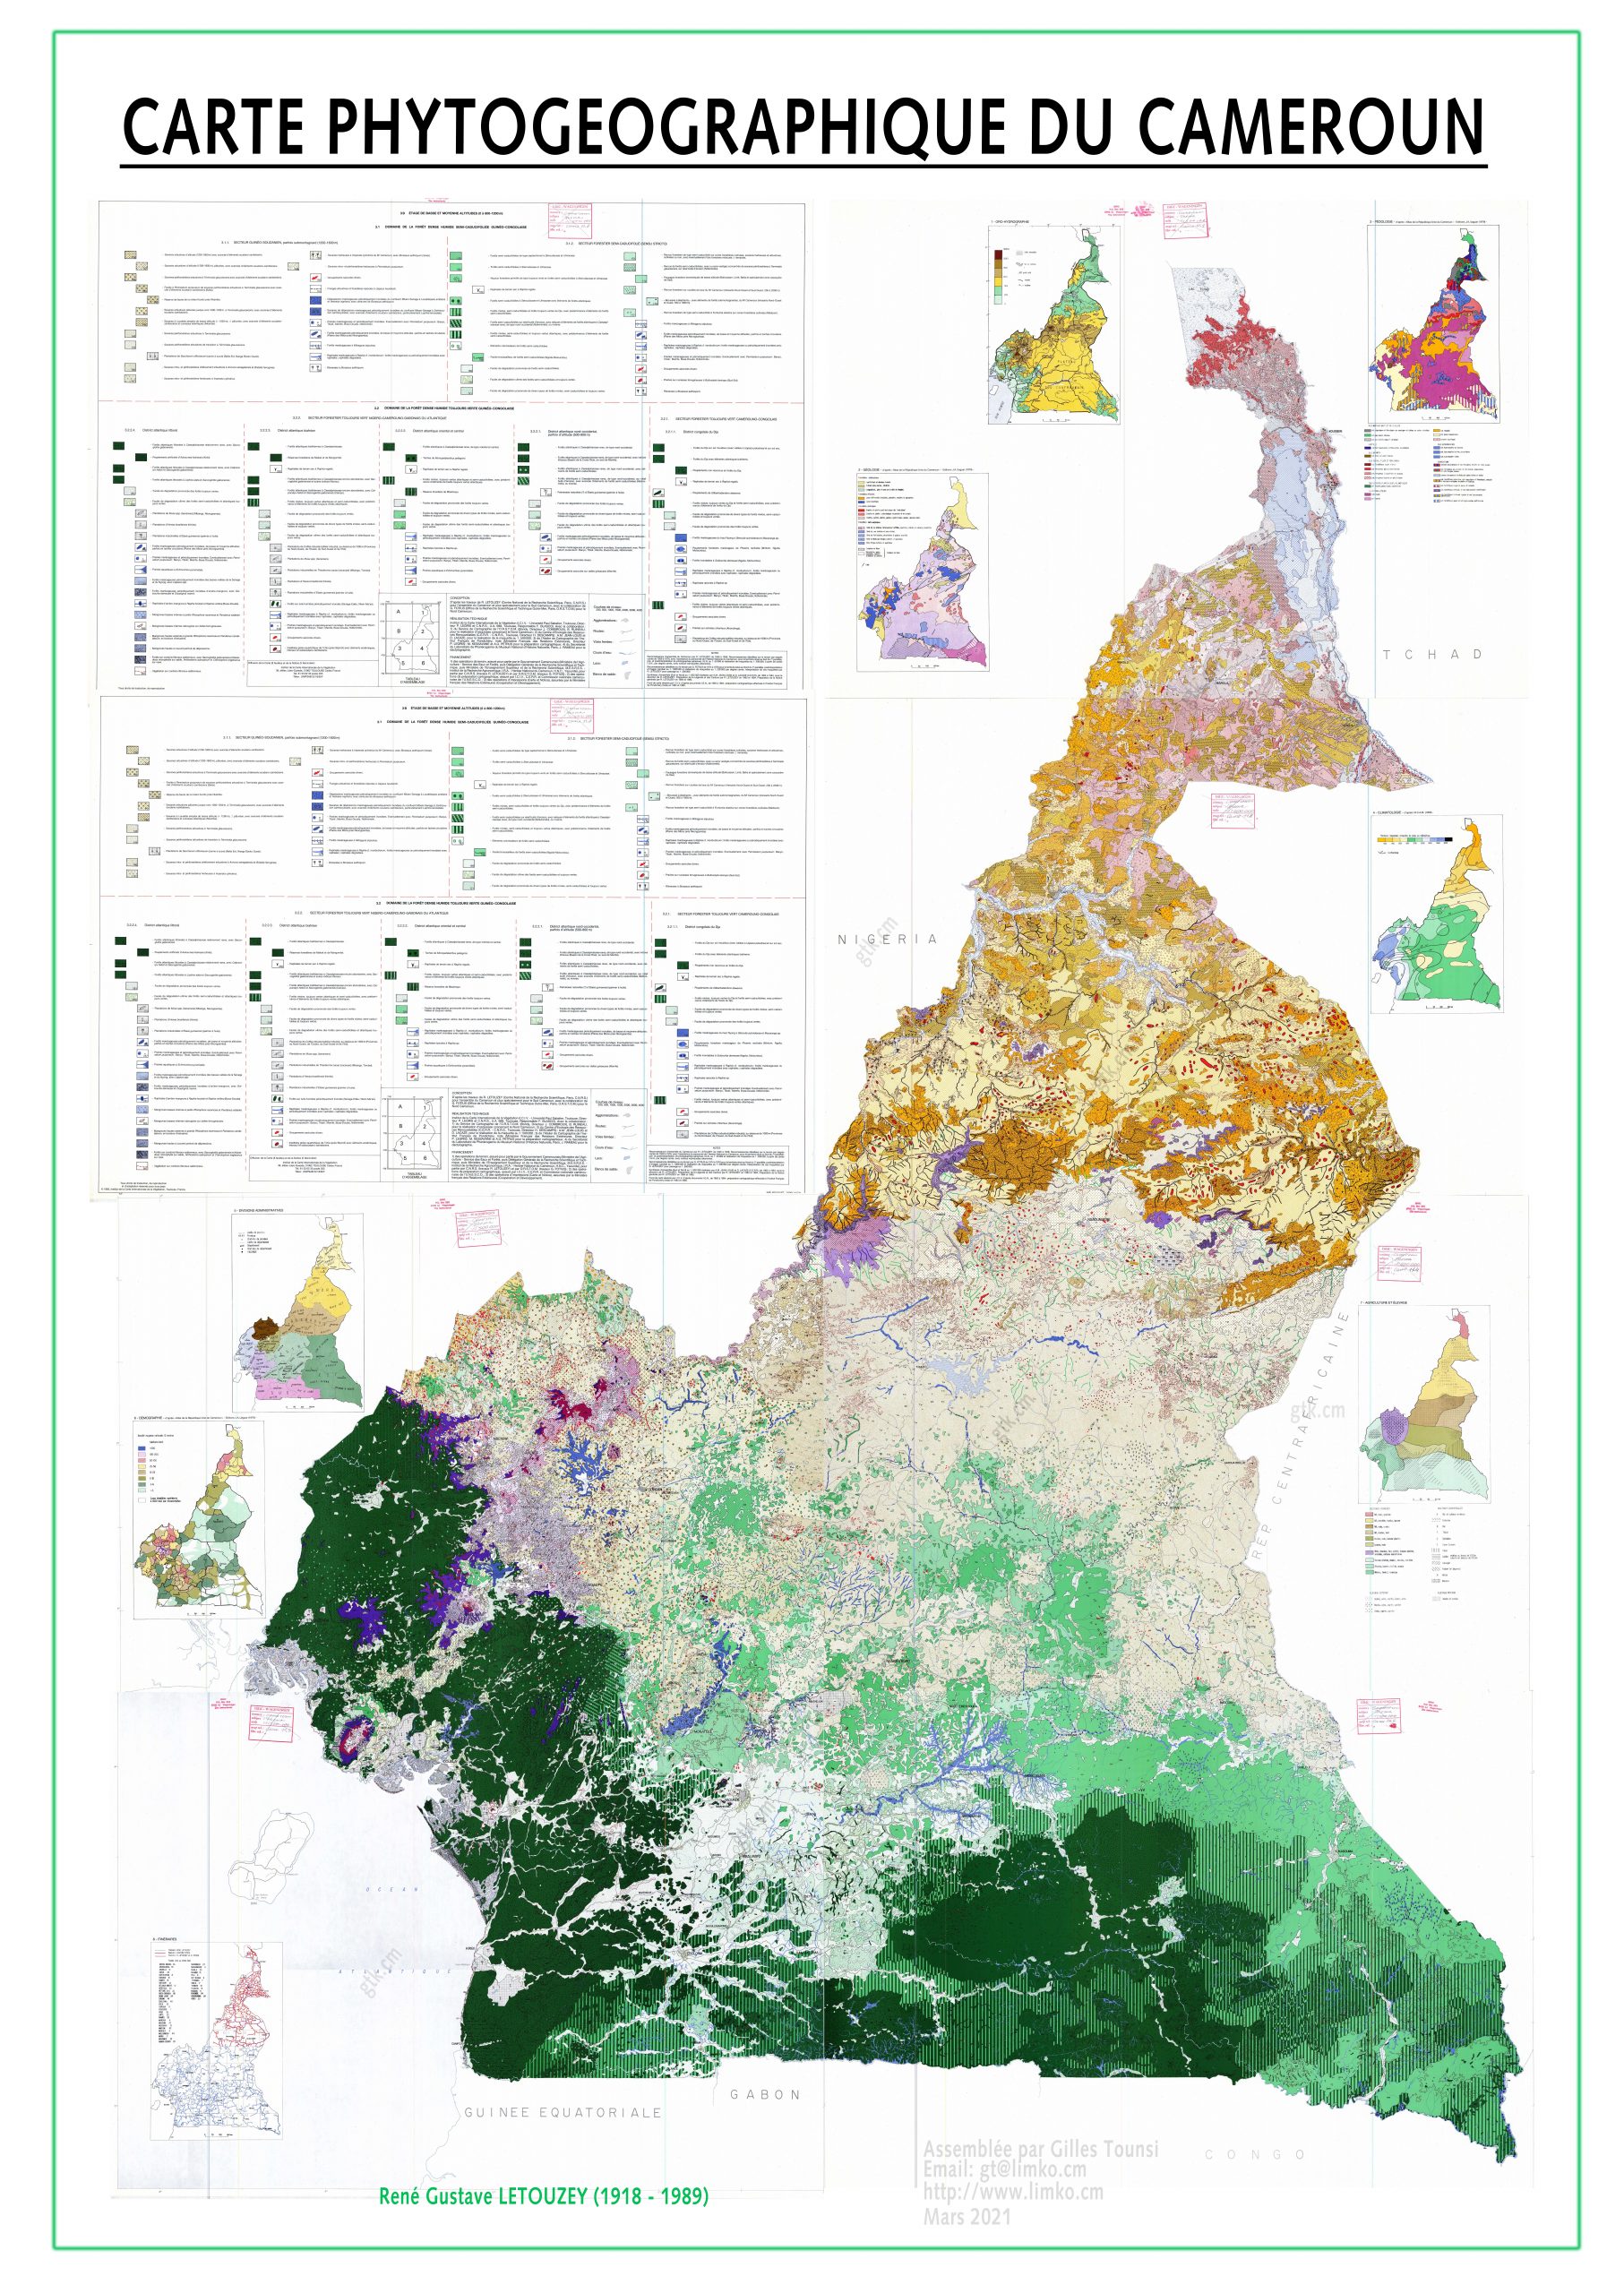 Carte Phytogéographique du Cameroun